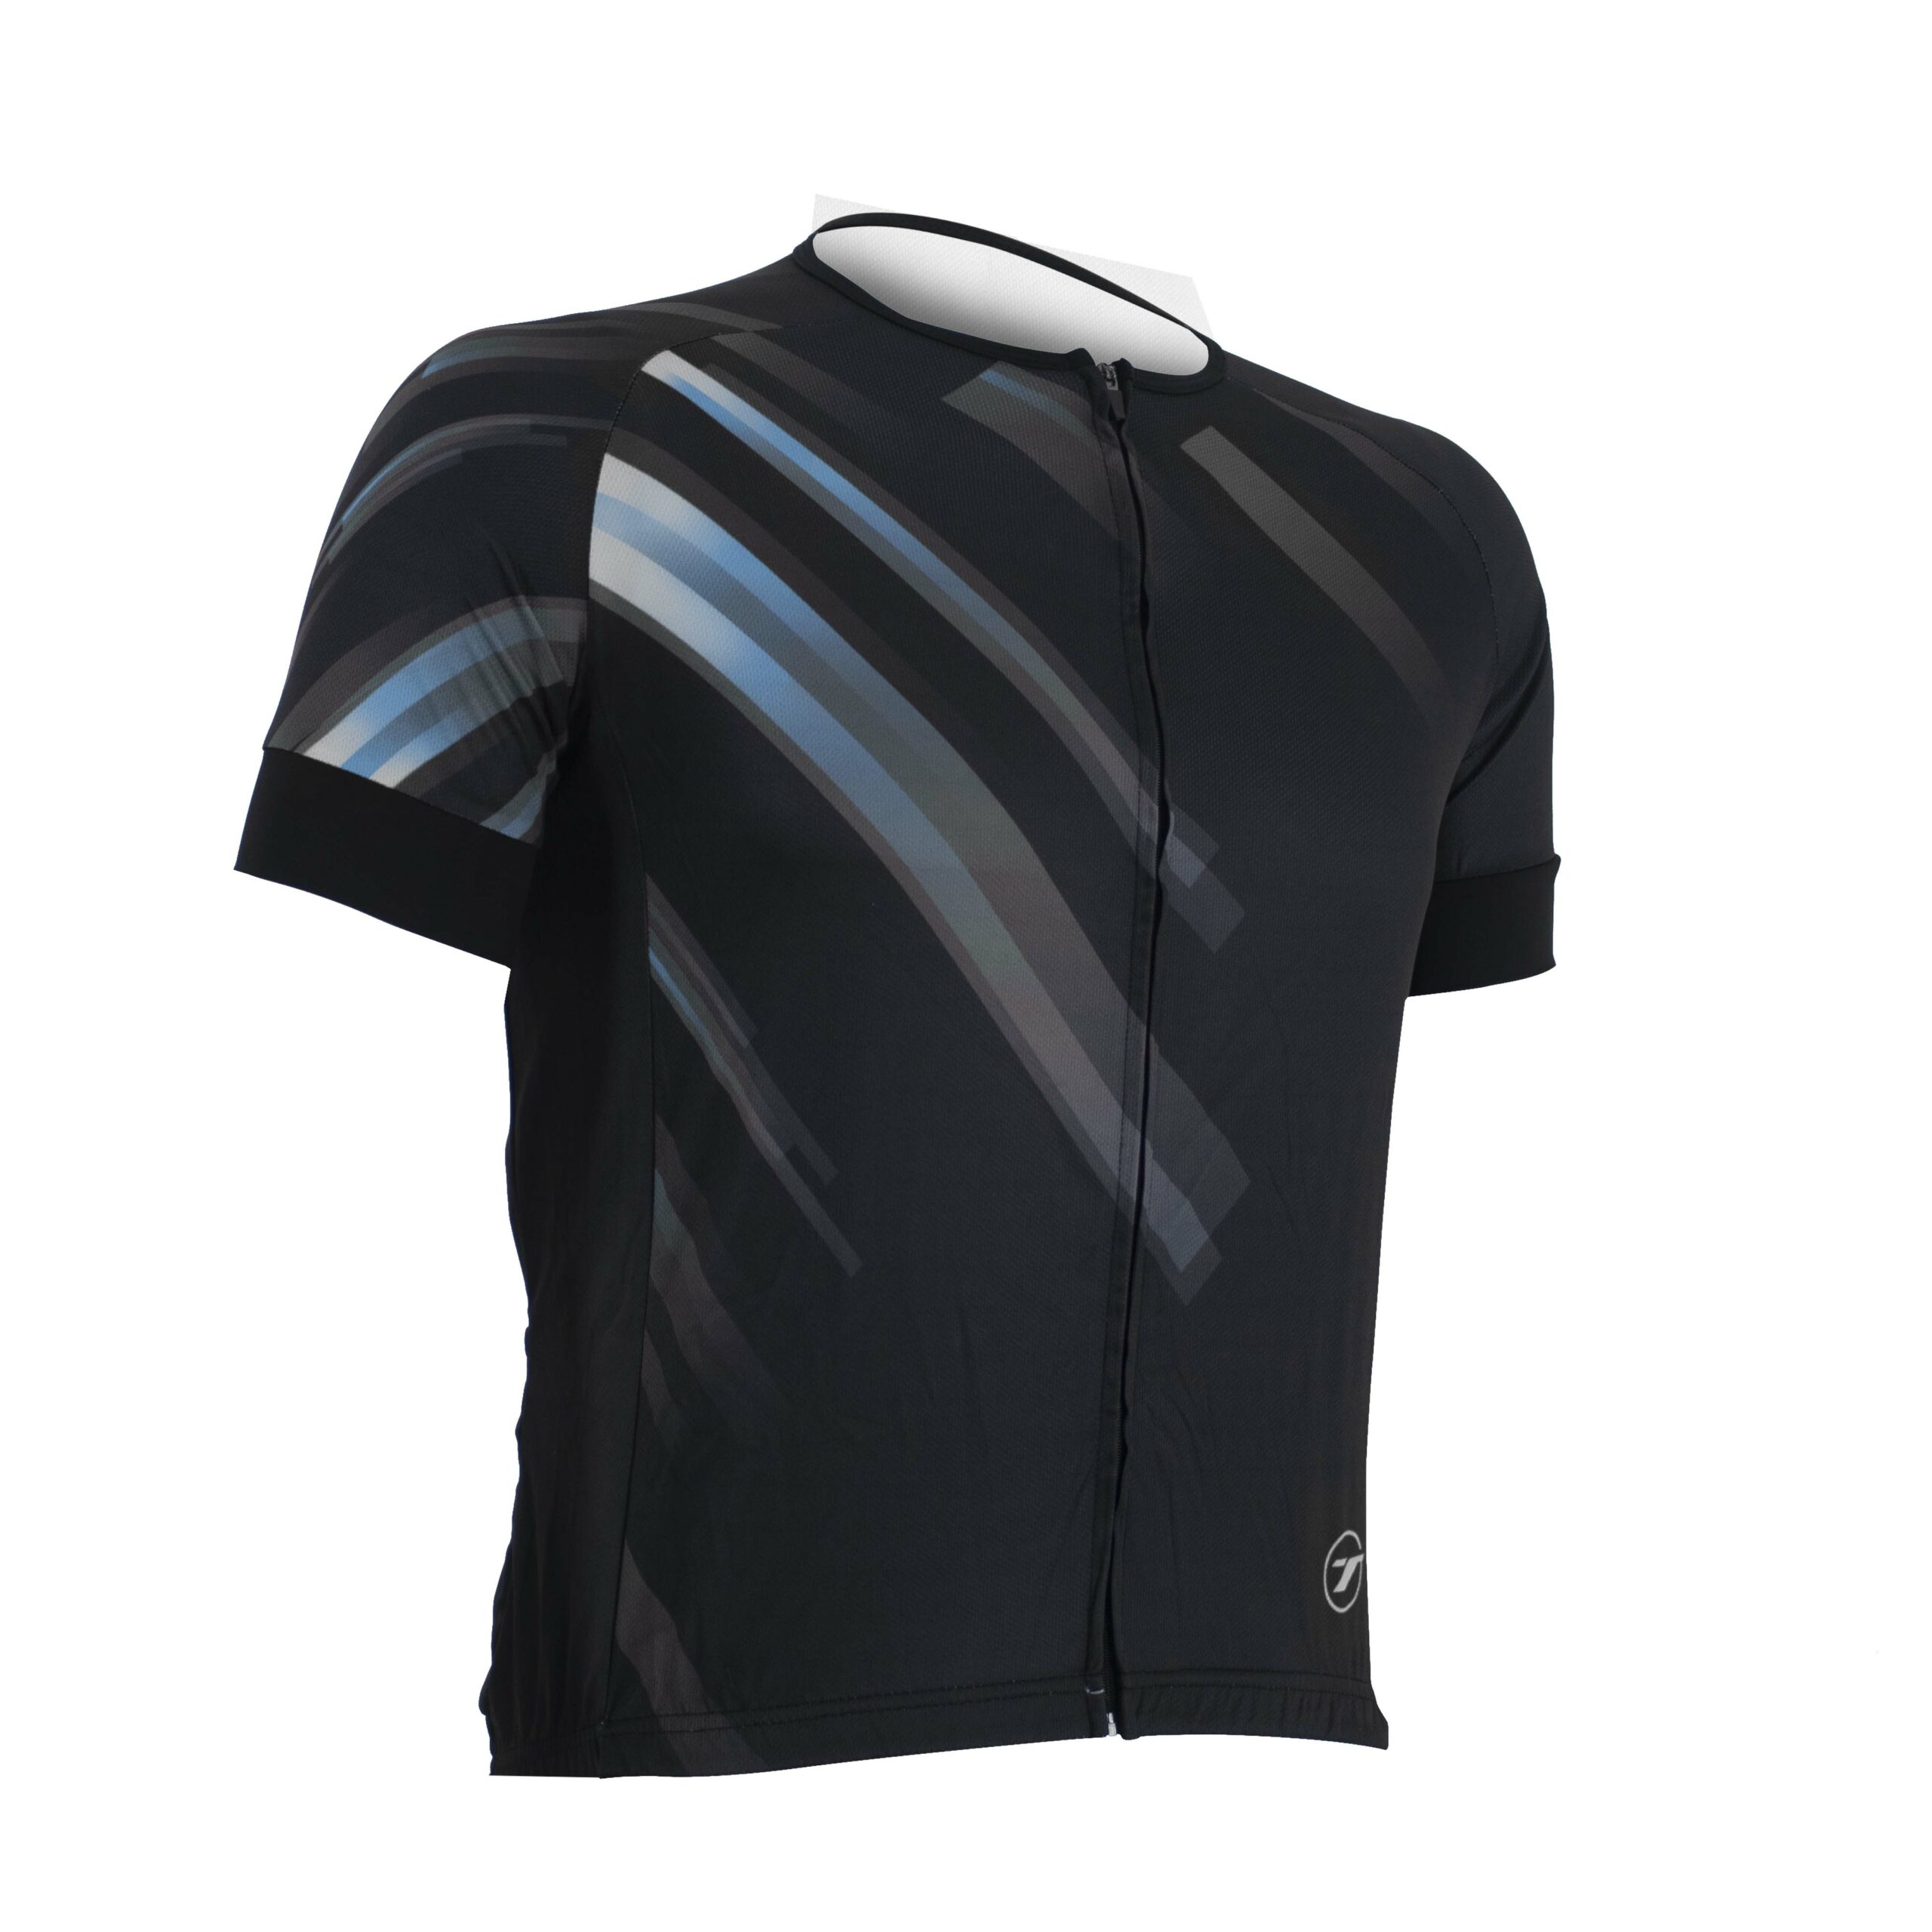 Camisa para ciclismo SUNNY | RIDE LINE - Preto/Cinza, G